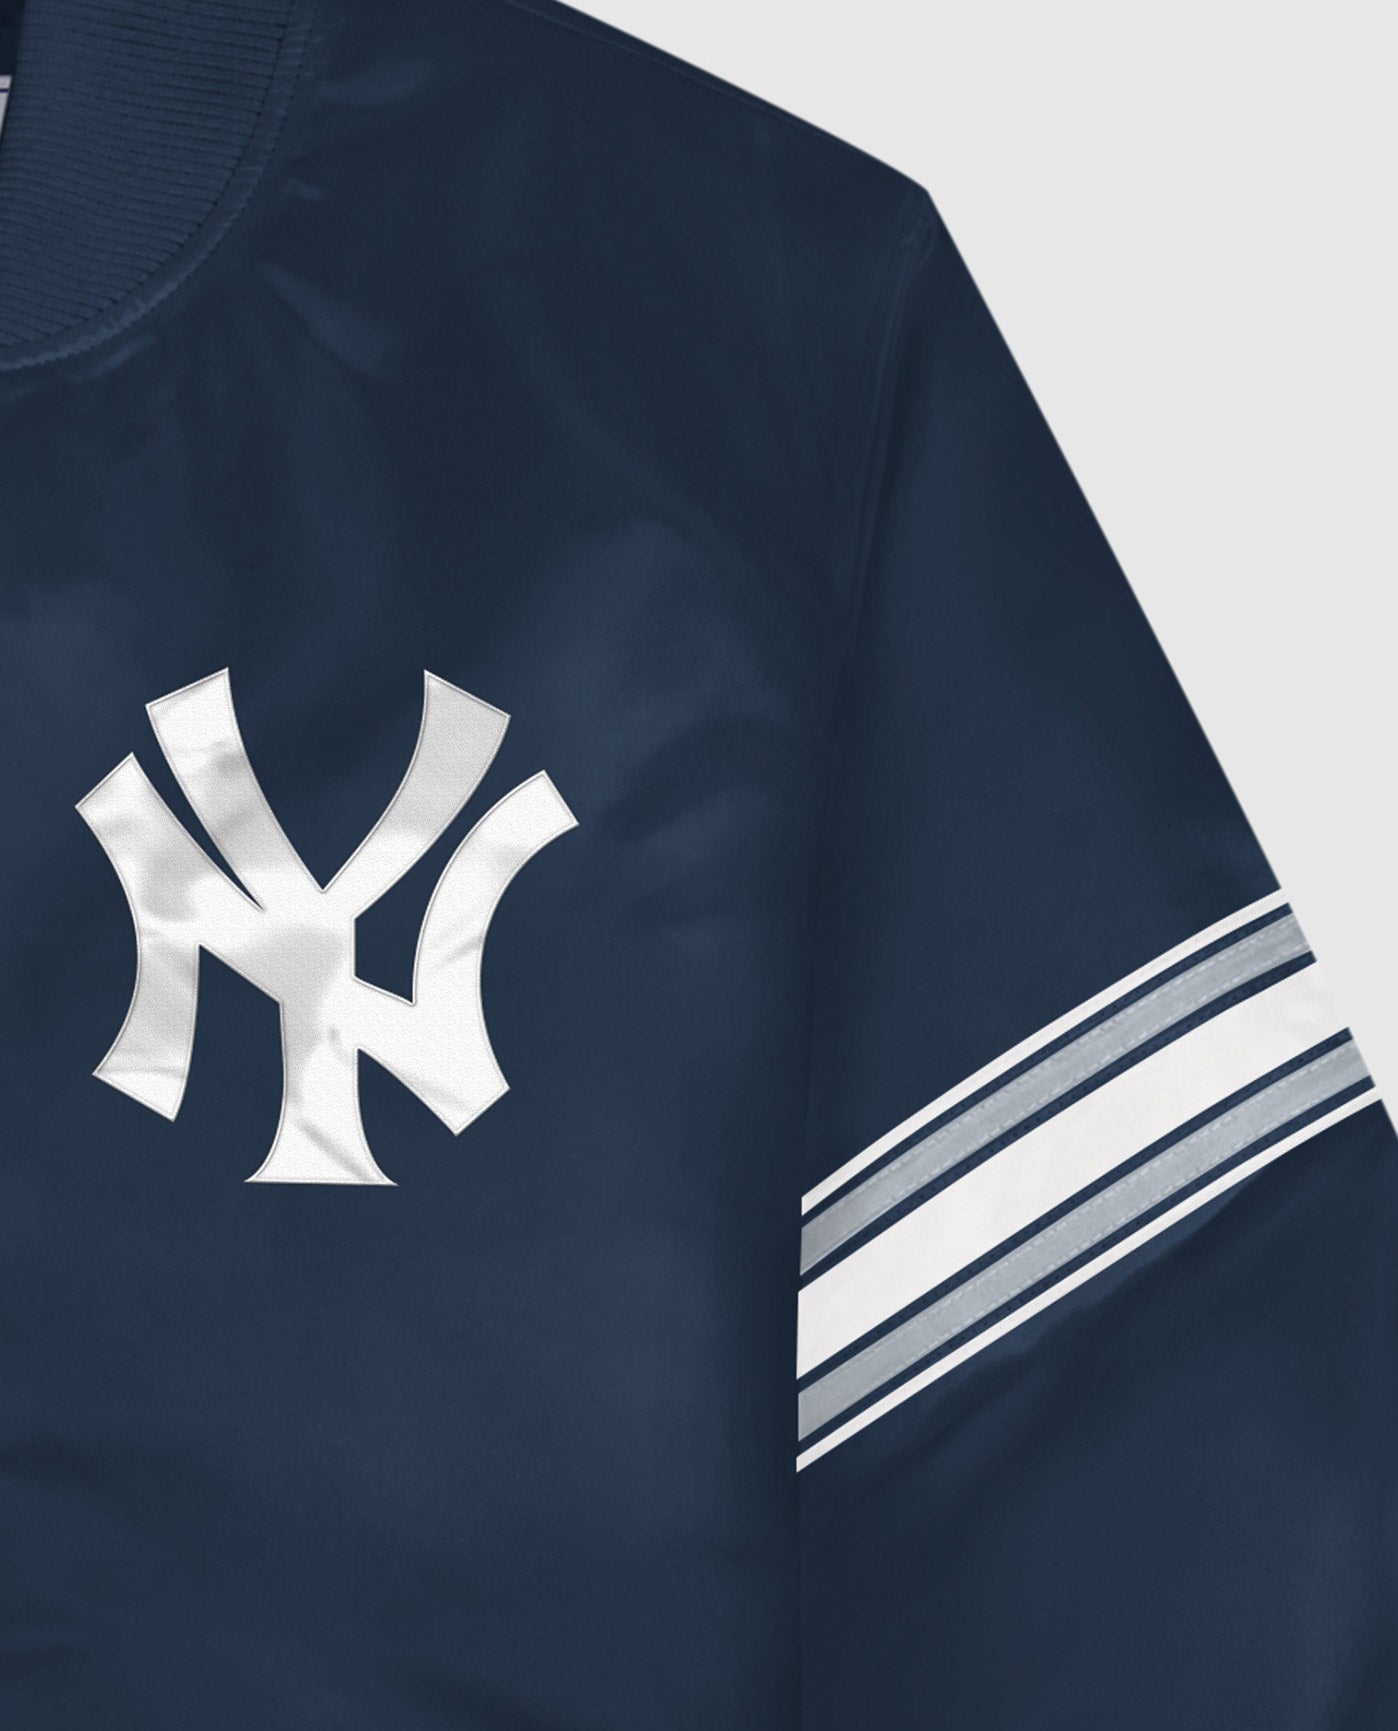 New York Yankees Big Logo Navy Blue Satin Bomber Jacket -GLJ